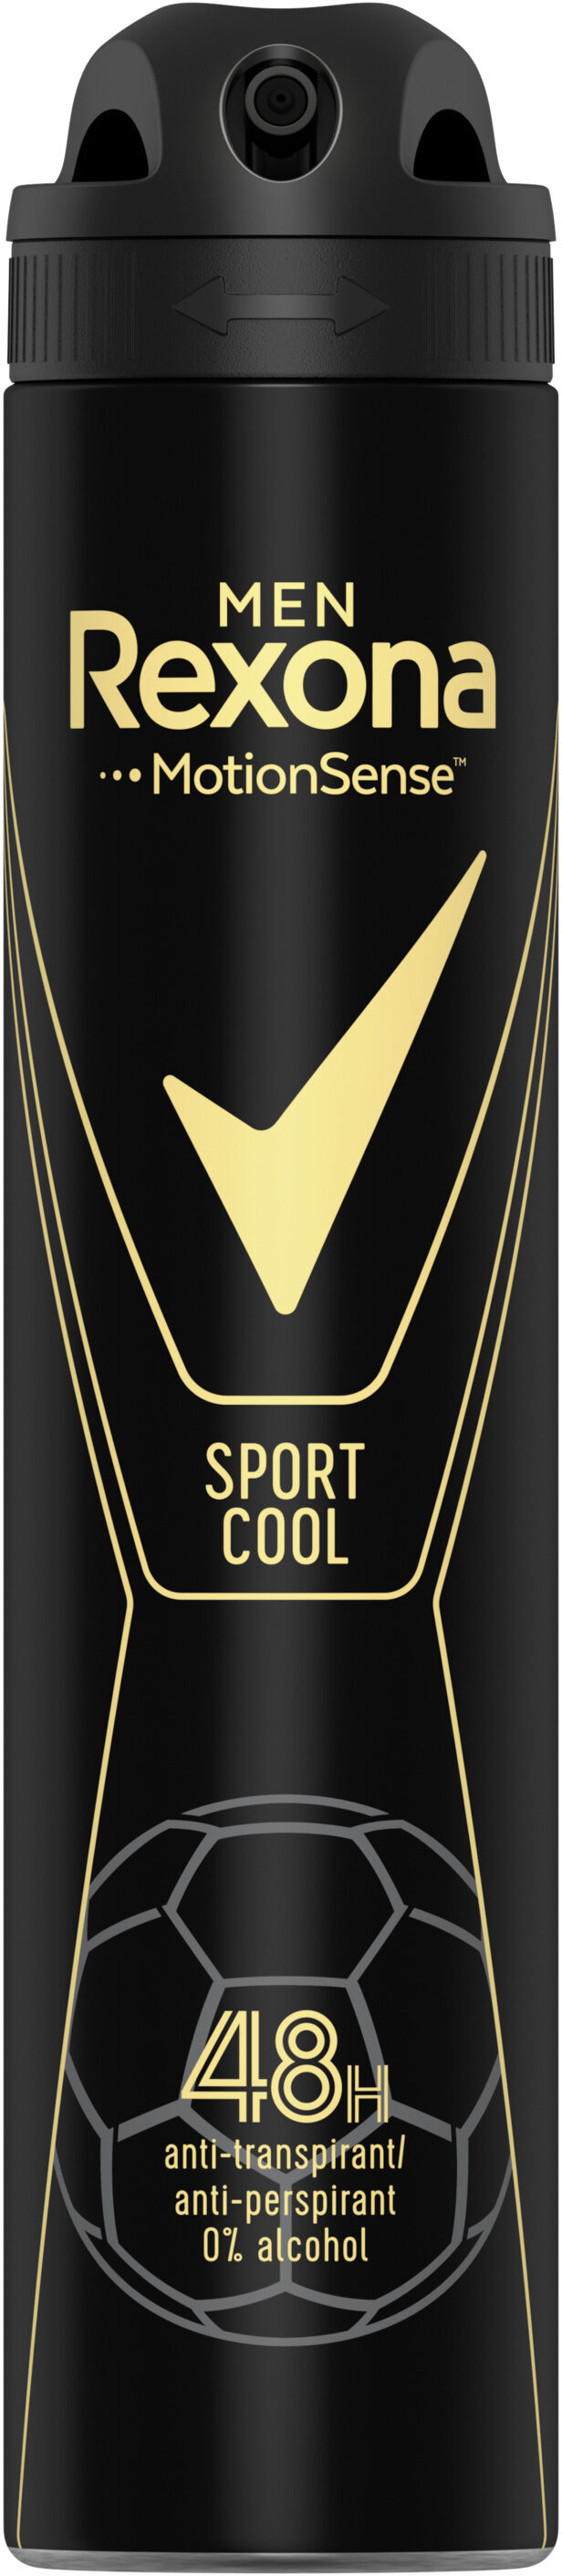 REXONA MEN Déodorant Homme Spray Anti-Transpirant Sport Cool 200ml - Produto - fr